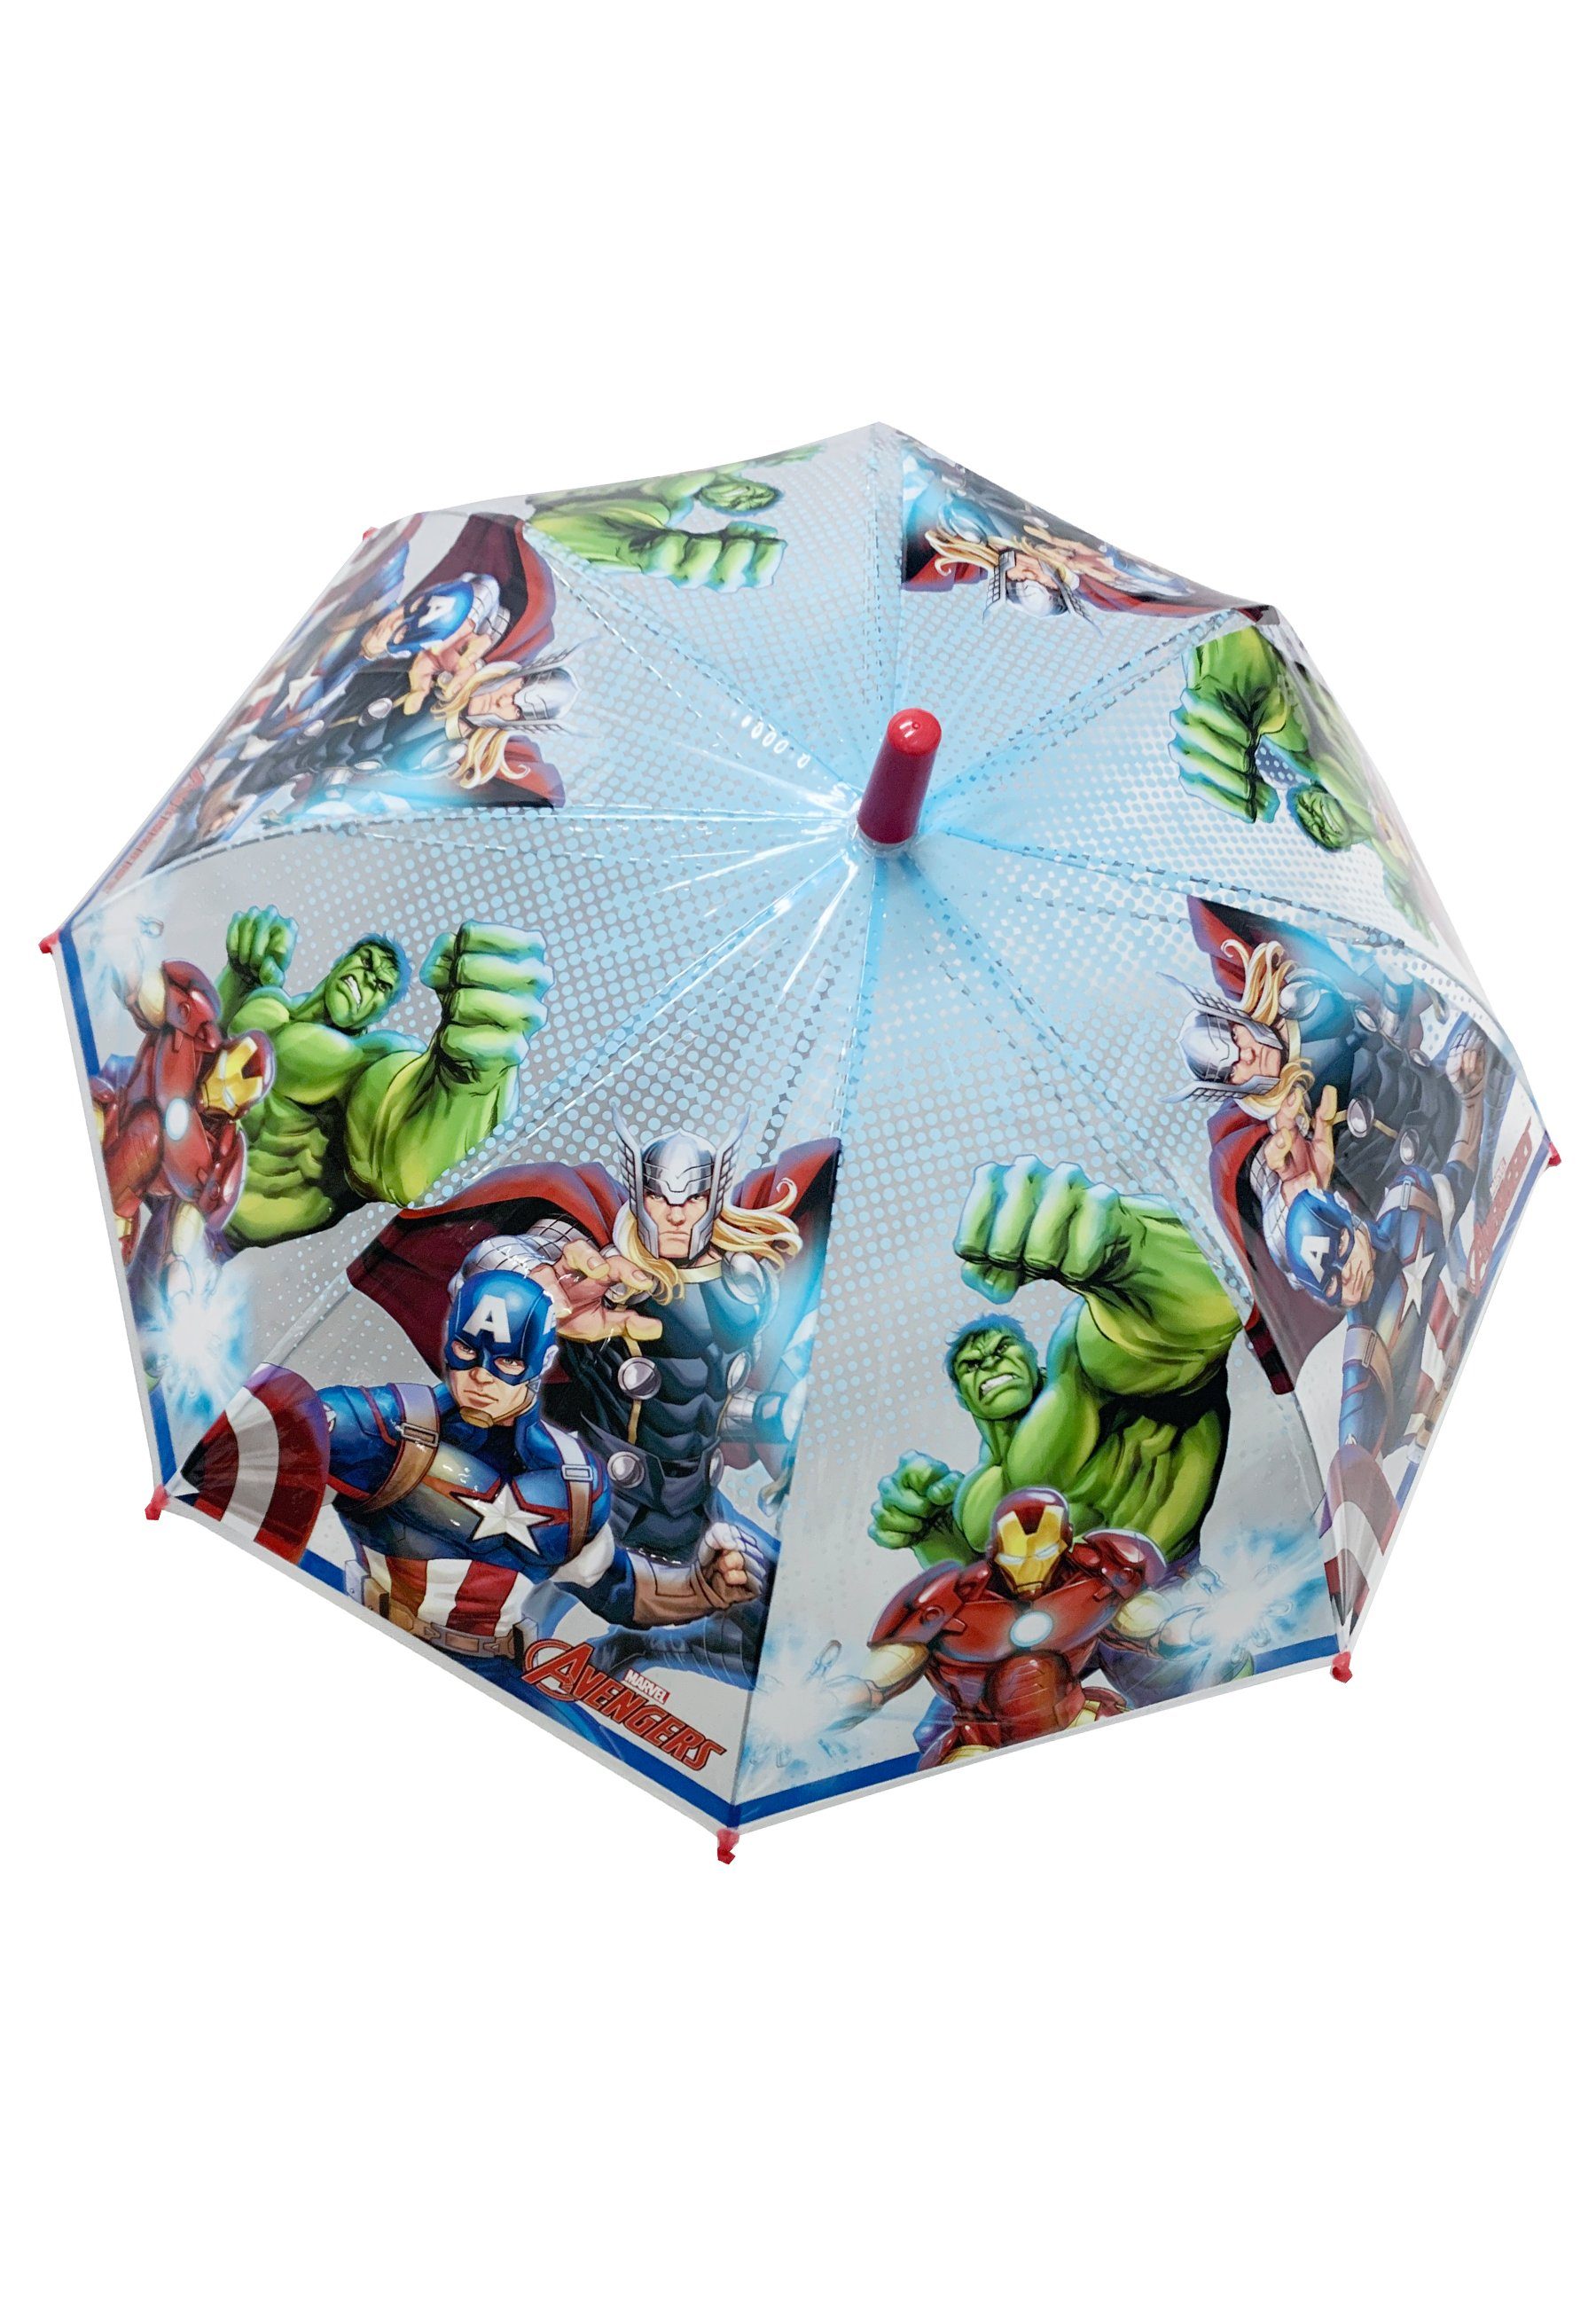 The AVENGERS Stockregenschirm Iron Man Hulk Thor Kinder Jungen Stock-Schirm Kuppelschirm